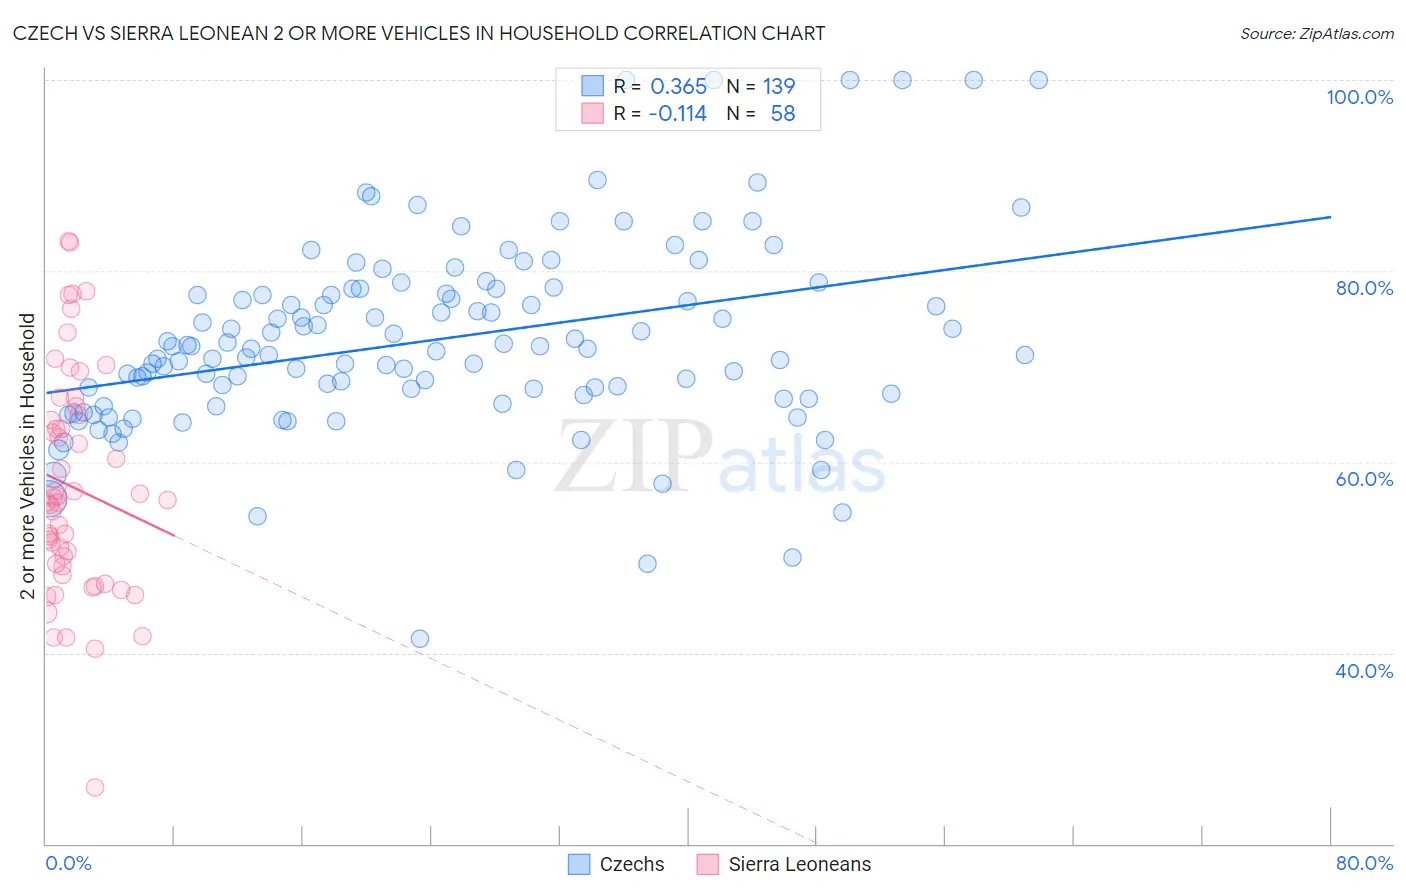 Czech vs Sierra Leonean 2 or more Vehicles in Household